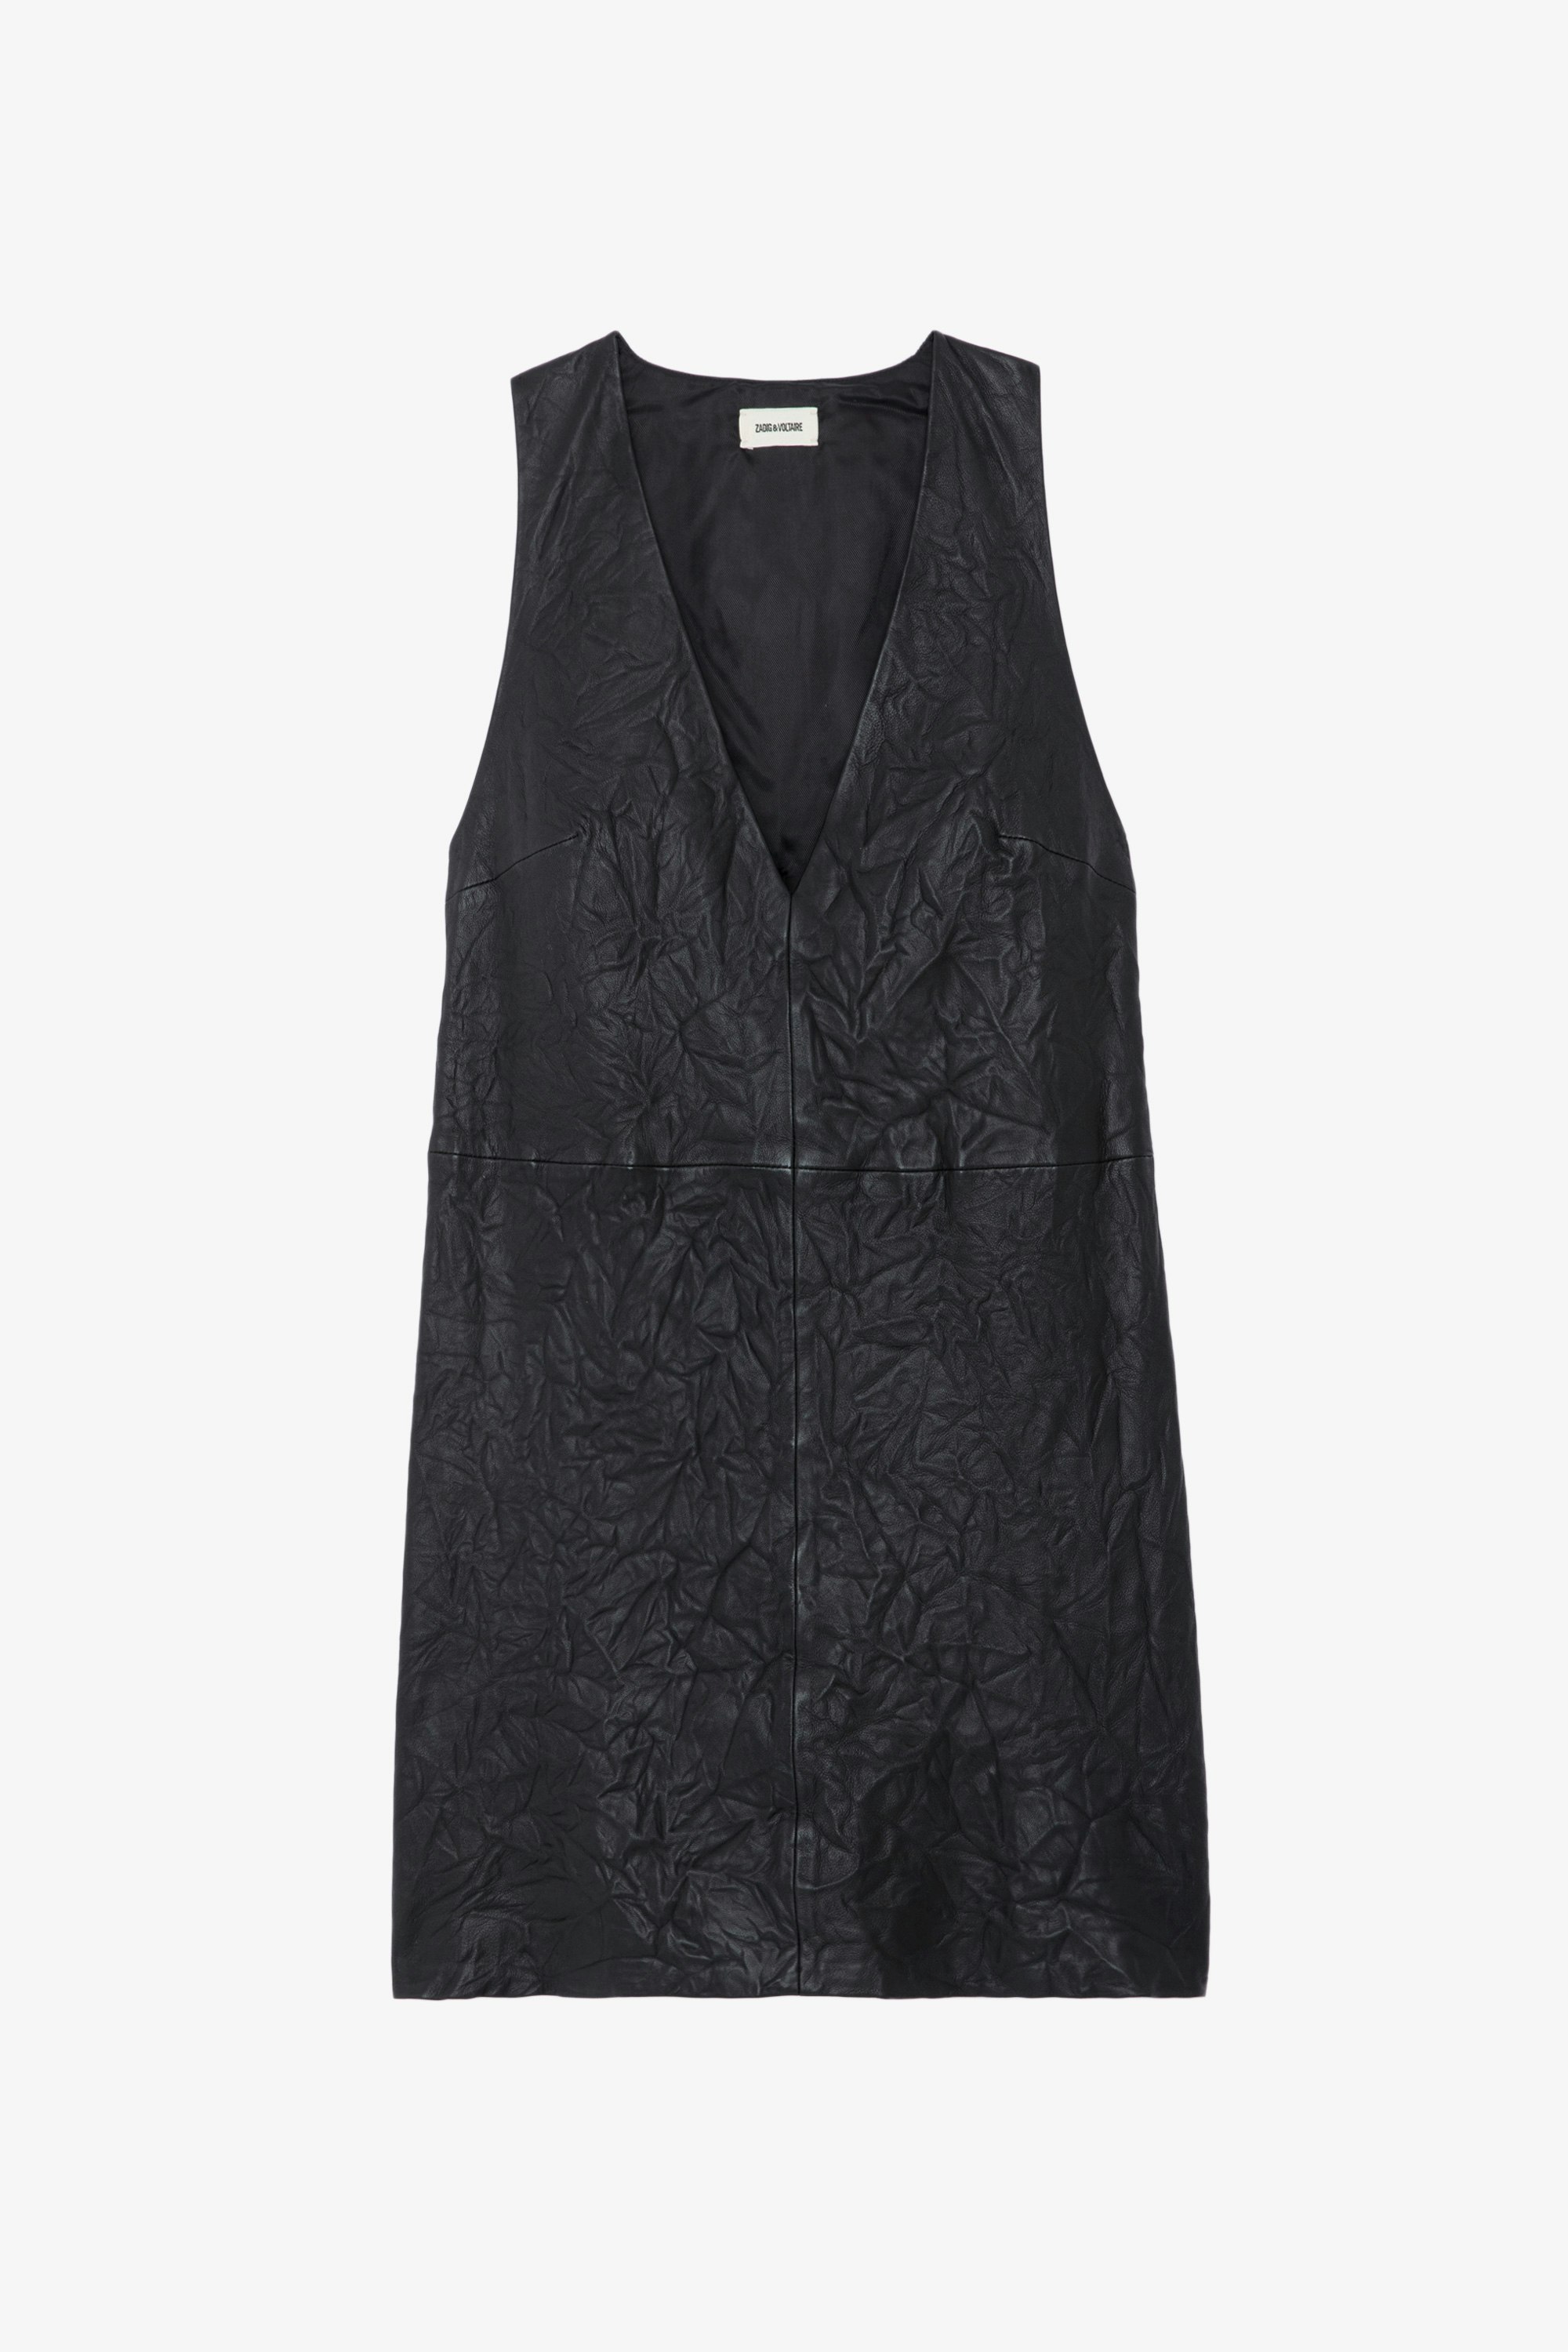 Rasha Crinkled Leather Dress - Short black crinkled leather sleeveless dress with V neckline.